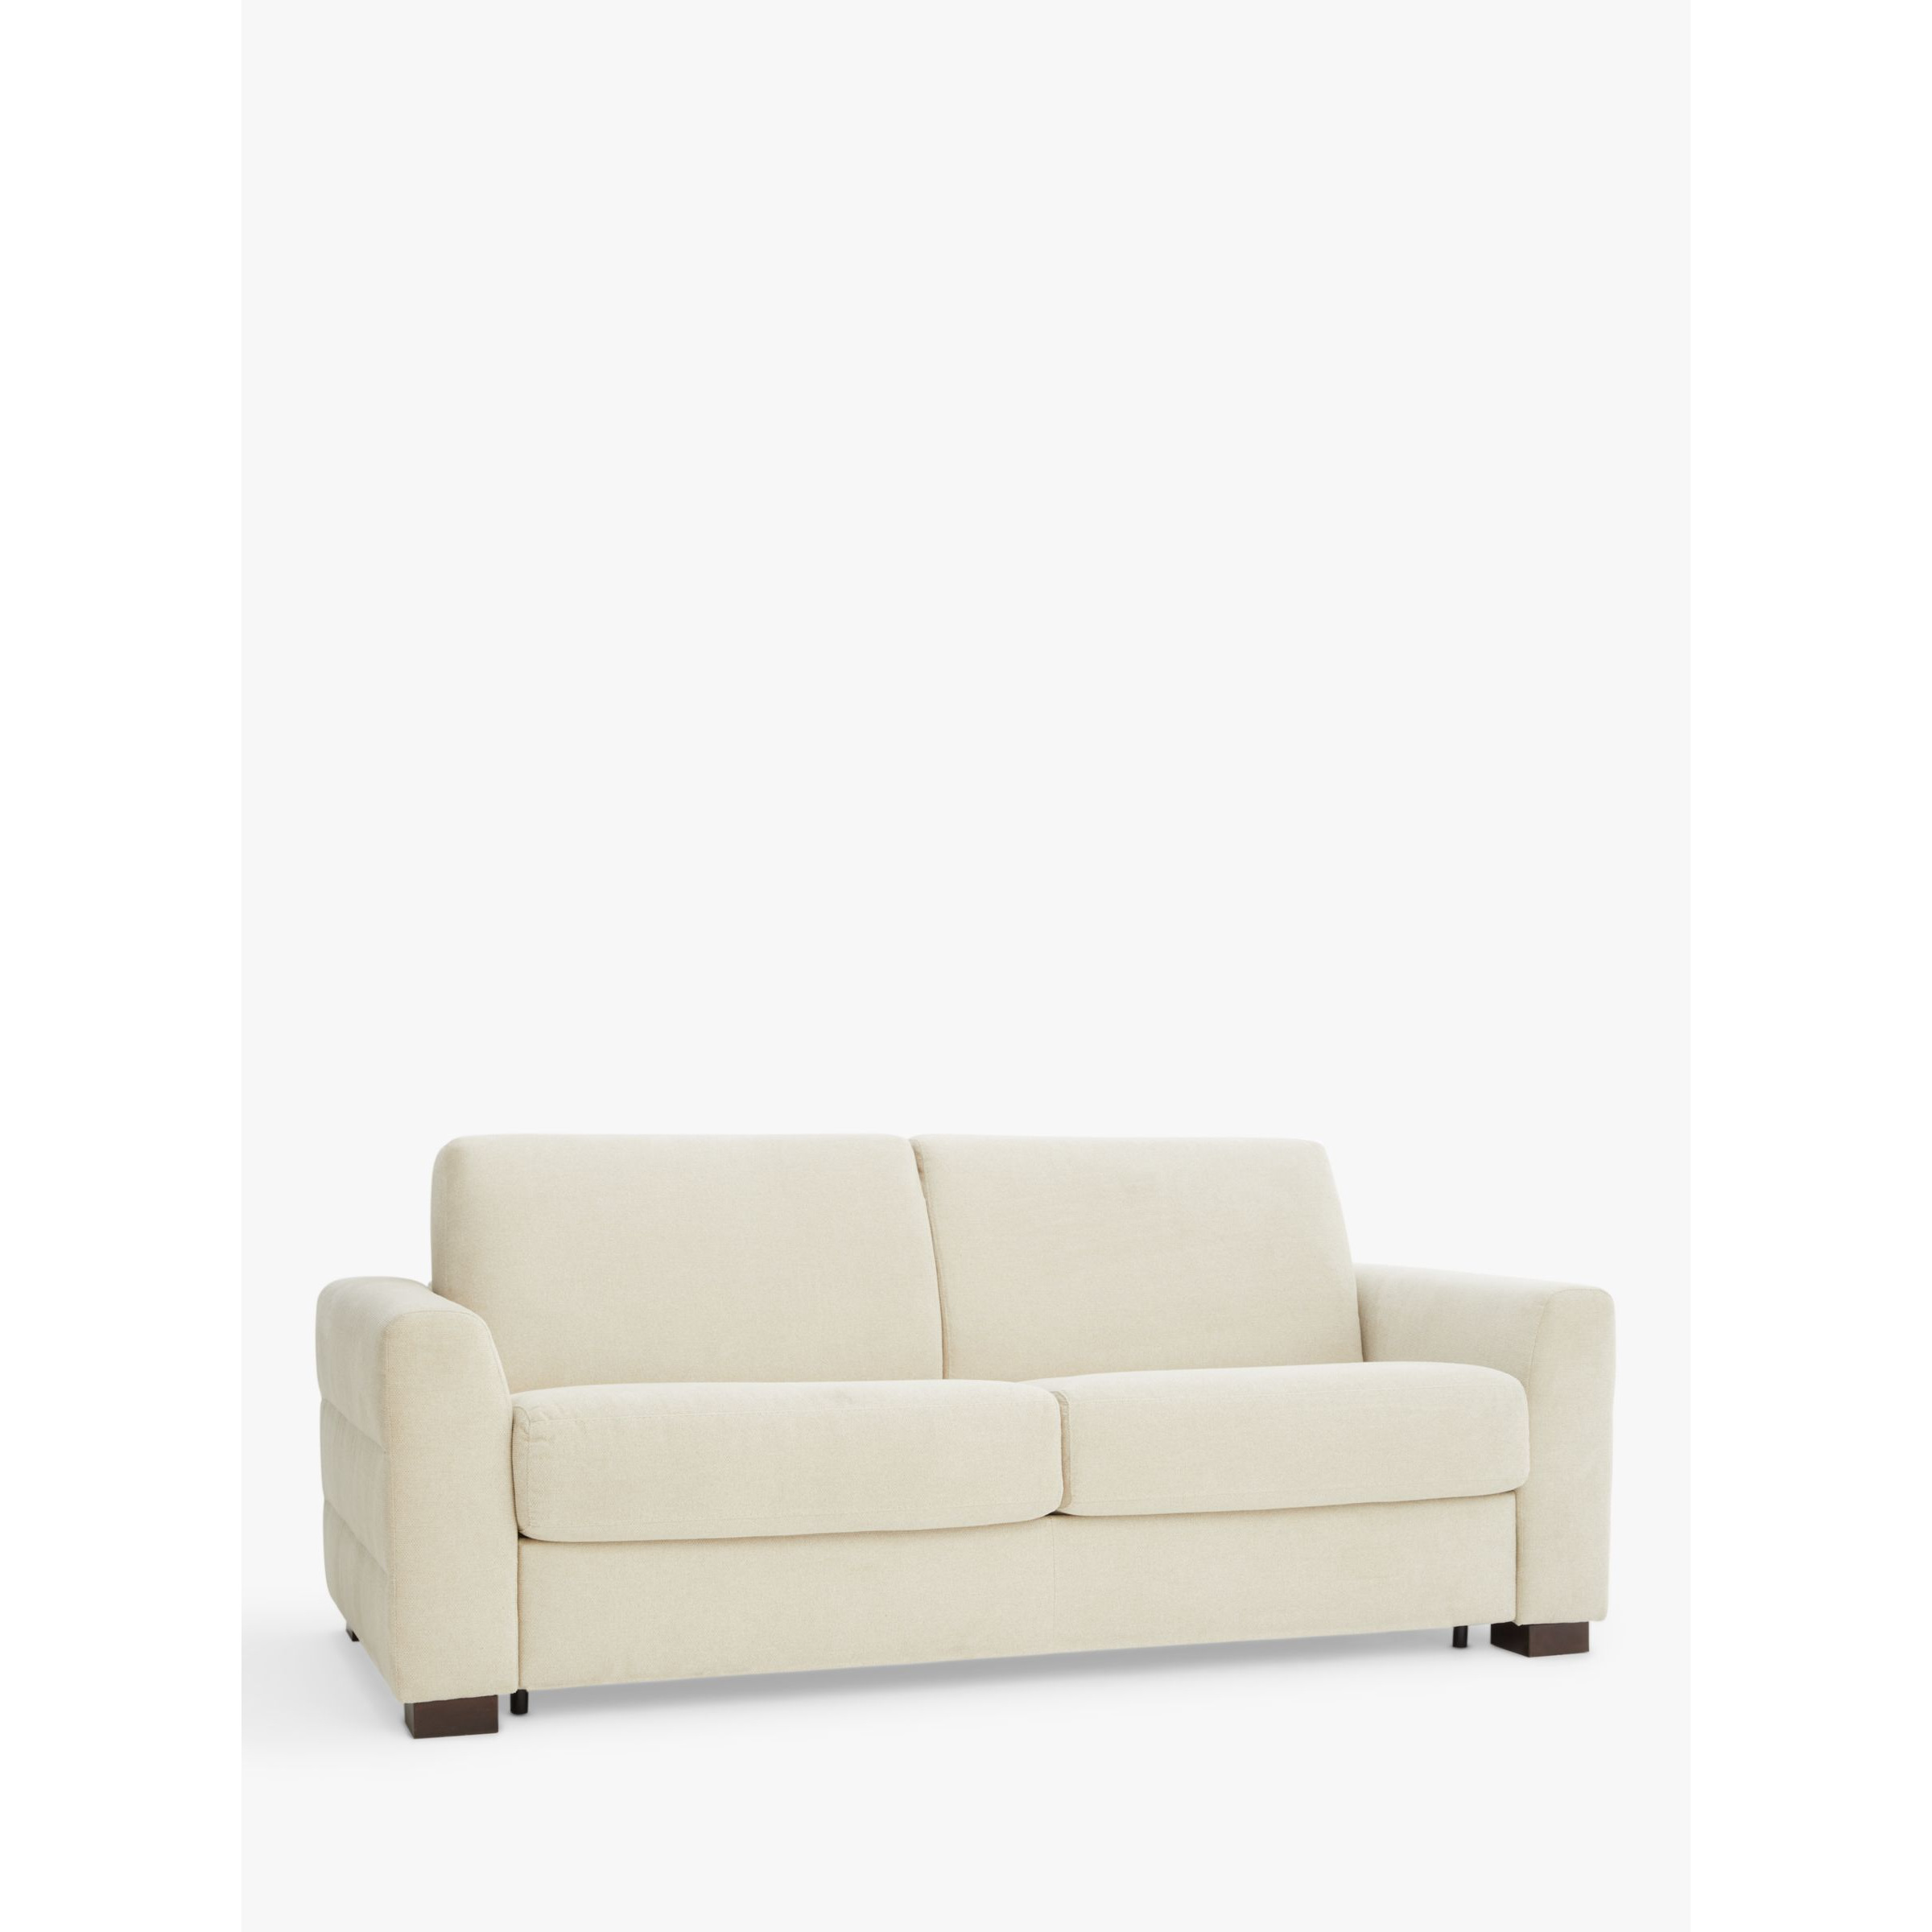 John Lewis Slumber Large 3 Seater Sofa Bed, Dark Leg, Easy Clean Natural Weave - image 1